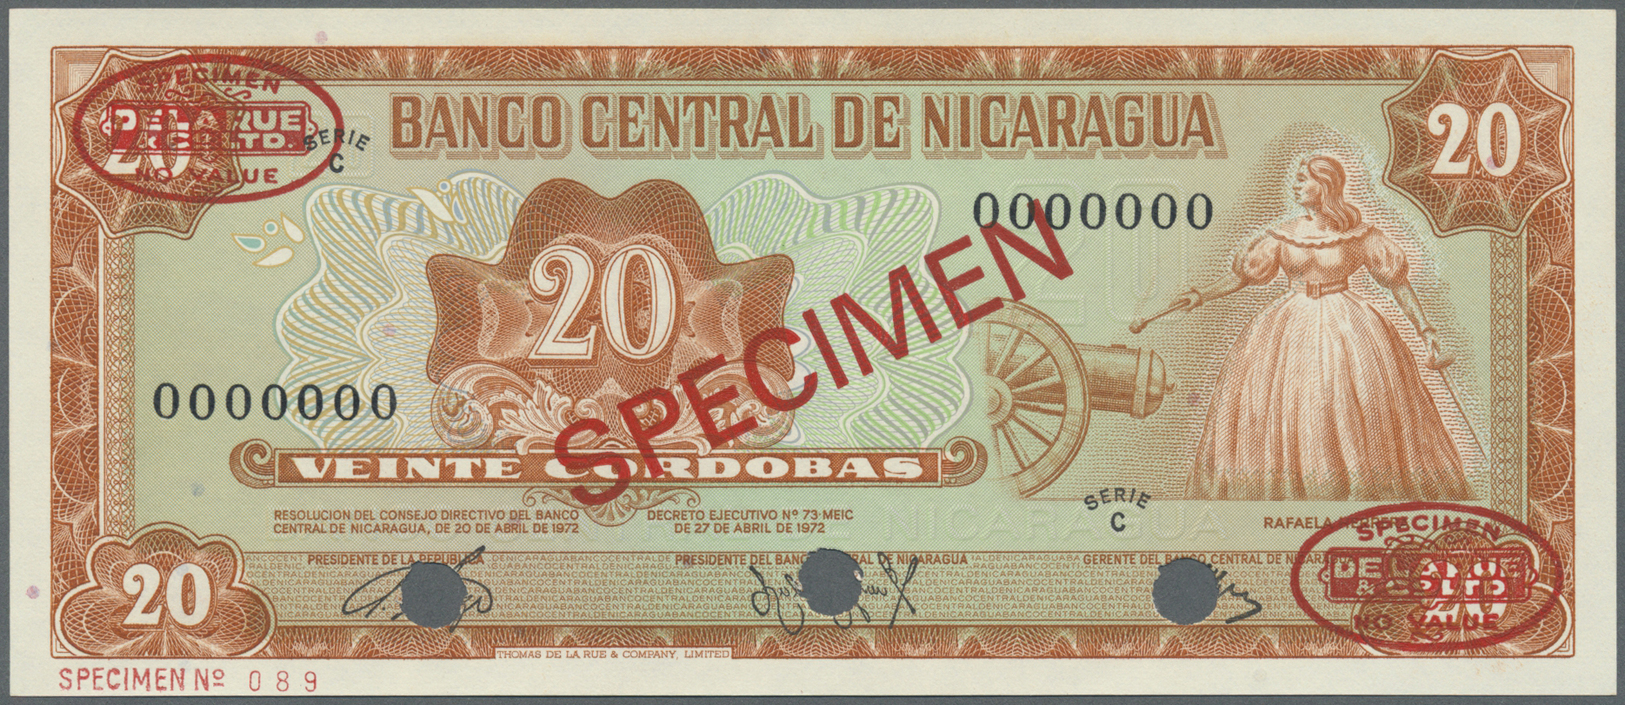 01859 Nicaragua: 20 Cordobas 1972 Specimen P. 124s In Condition: UNC. - Nicaragua